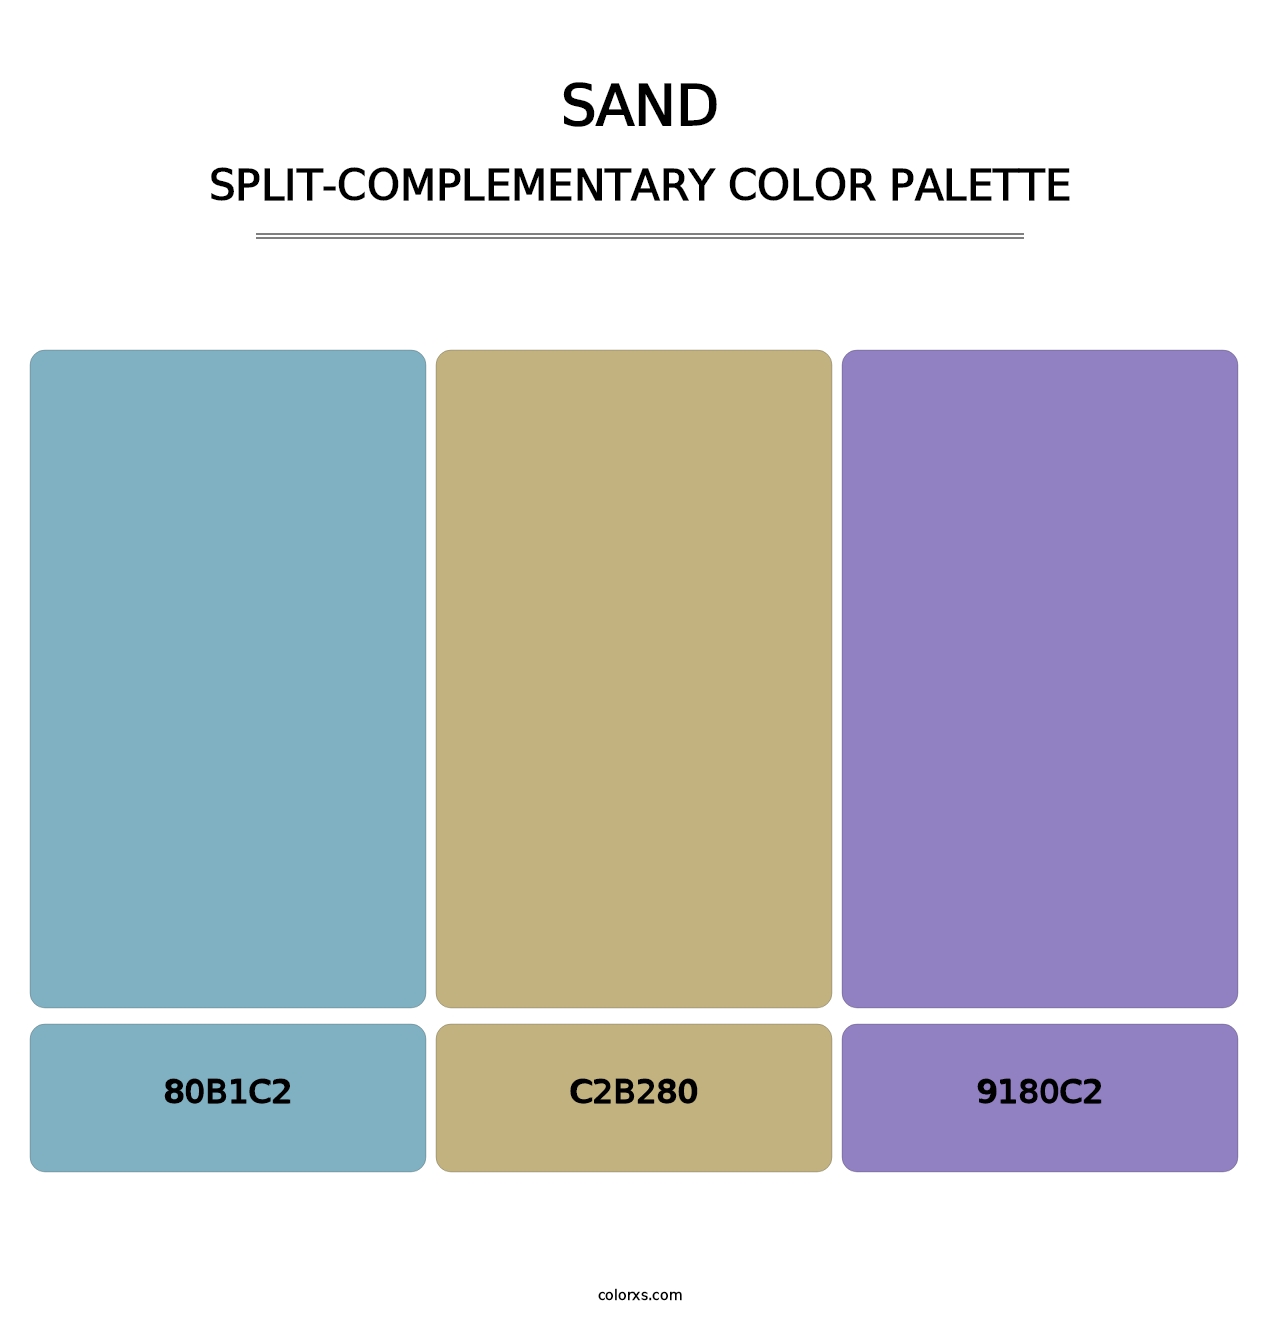 Sand - Split-Complementary Color Palette